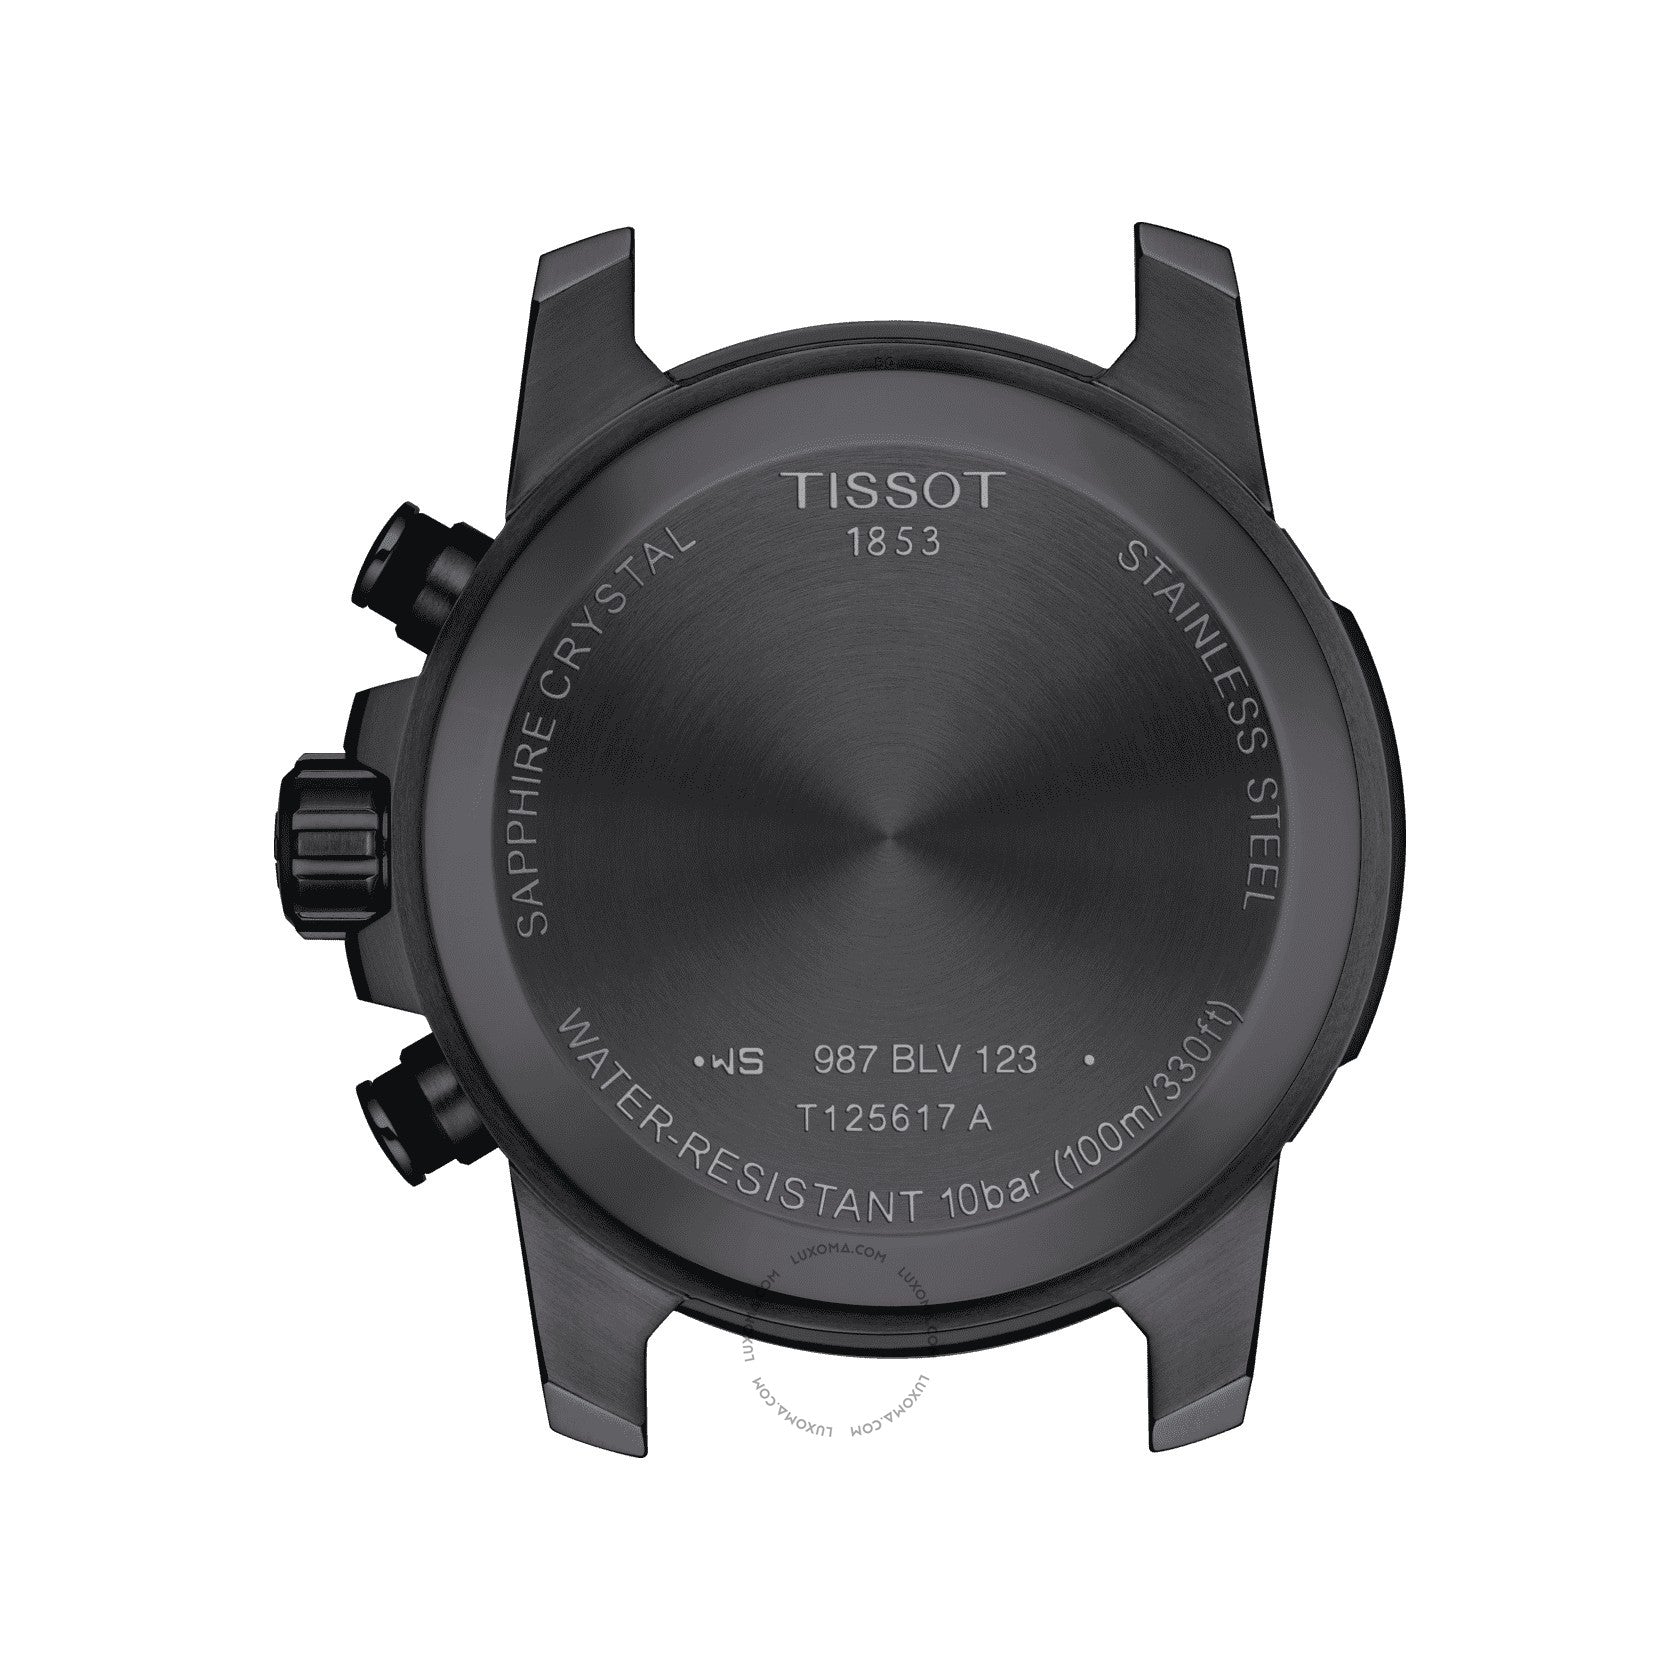 Tissot Tissot Supersport Chronograph Black Dial Men's Watch T125.617.37.051.01